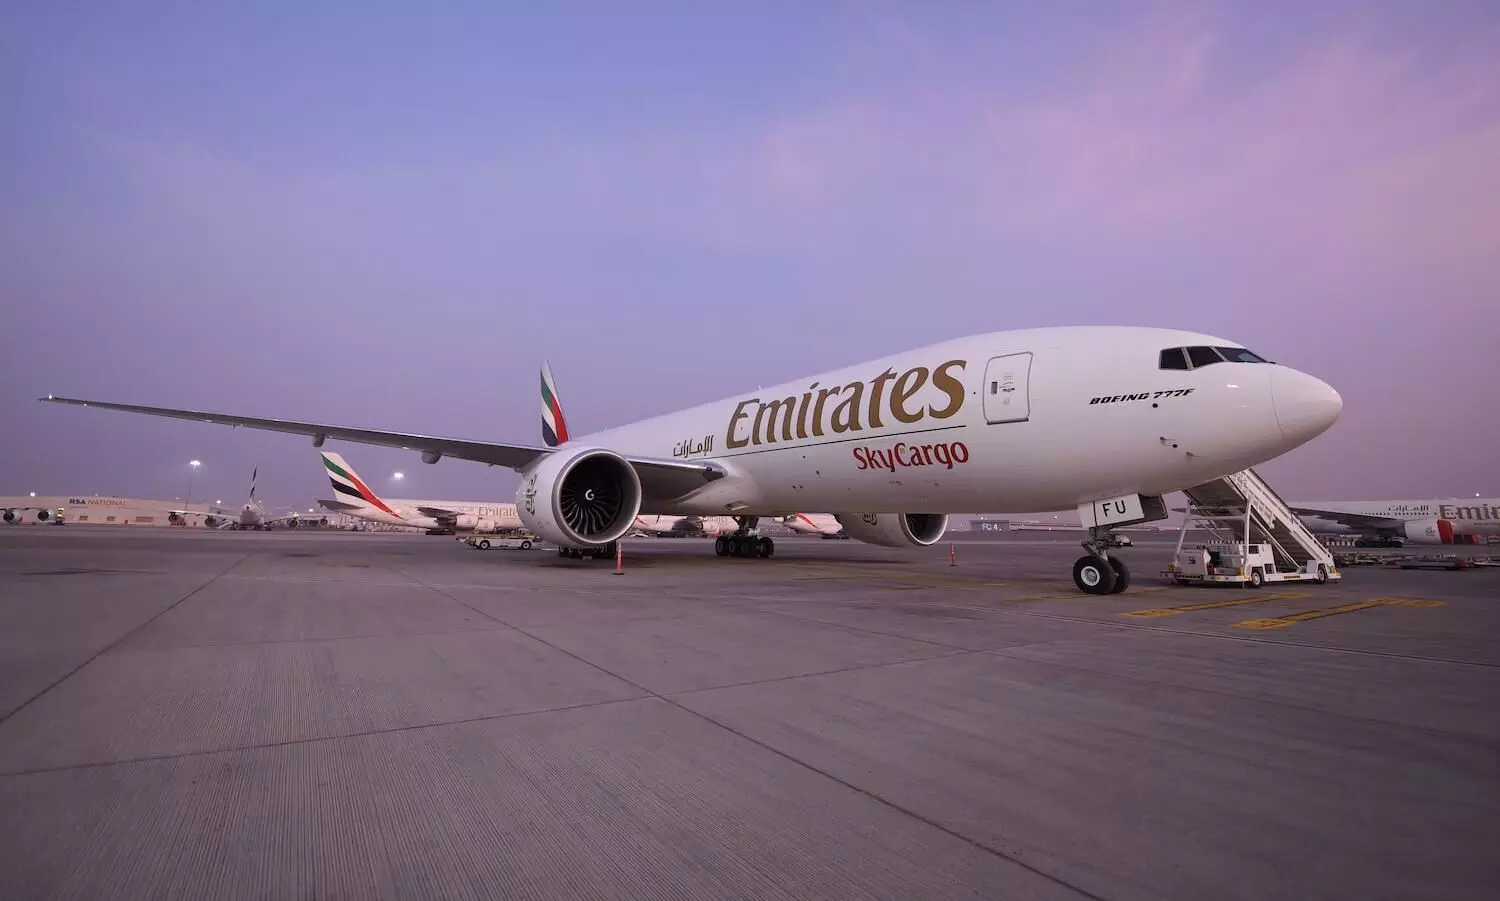 Emirates SkyCargo to double capacity in next decade